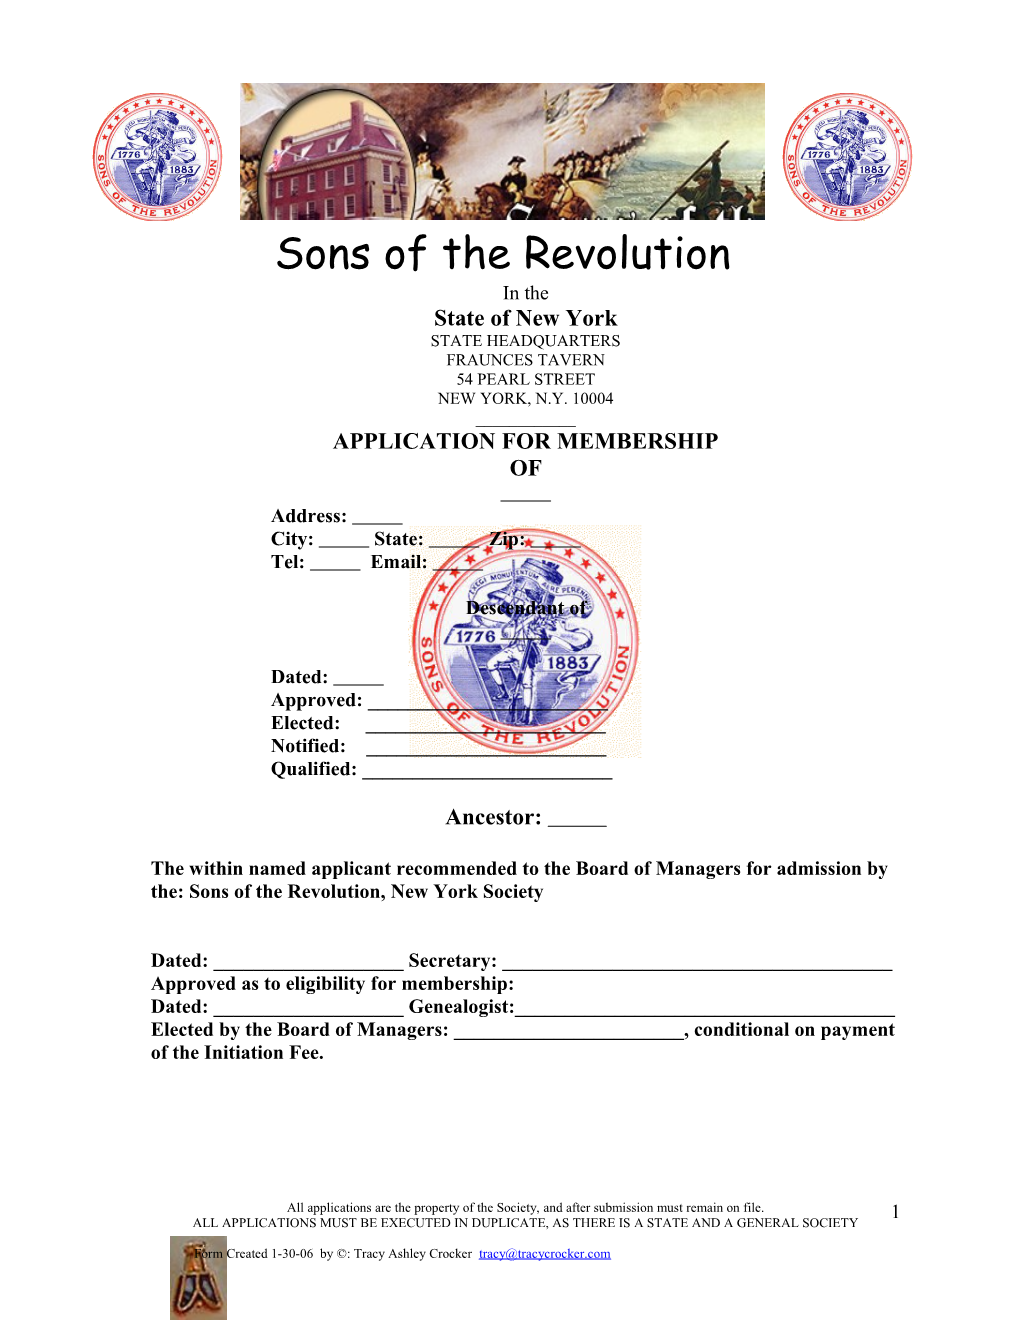 Order of the Merovingian Dynasty